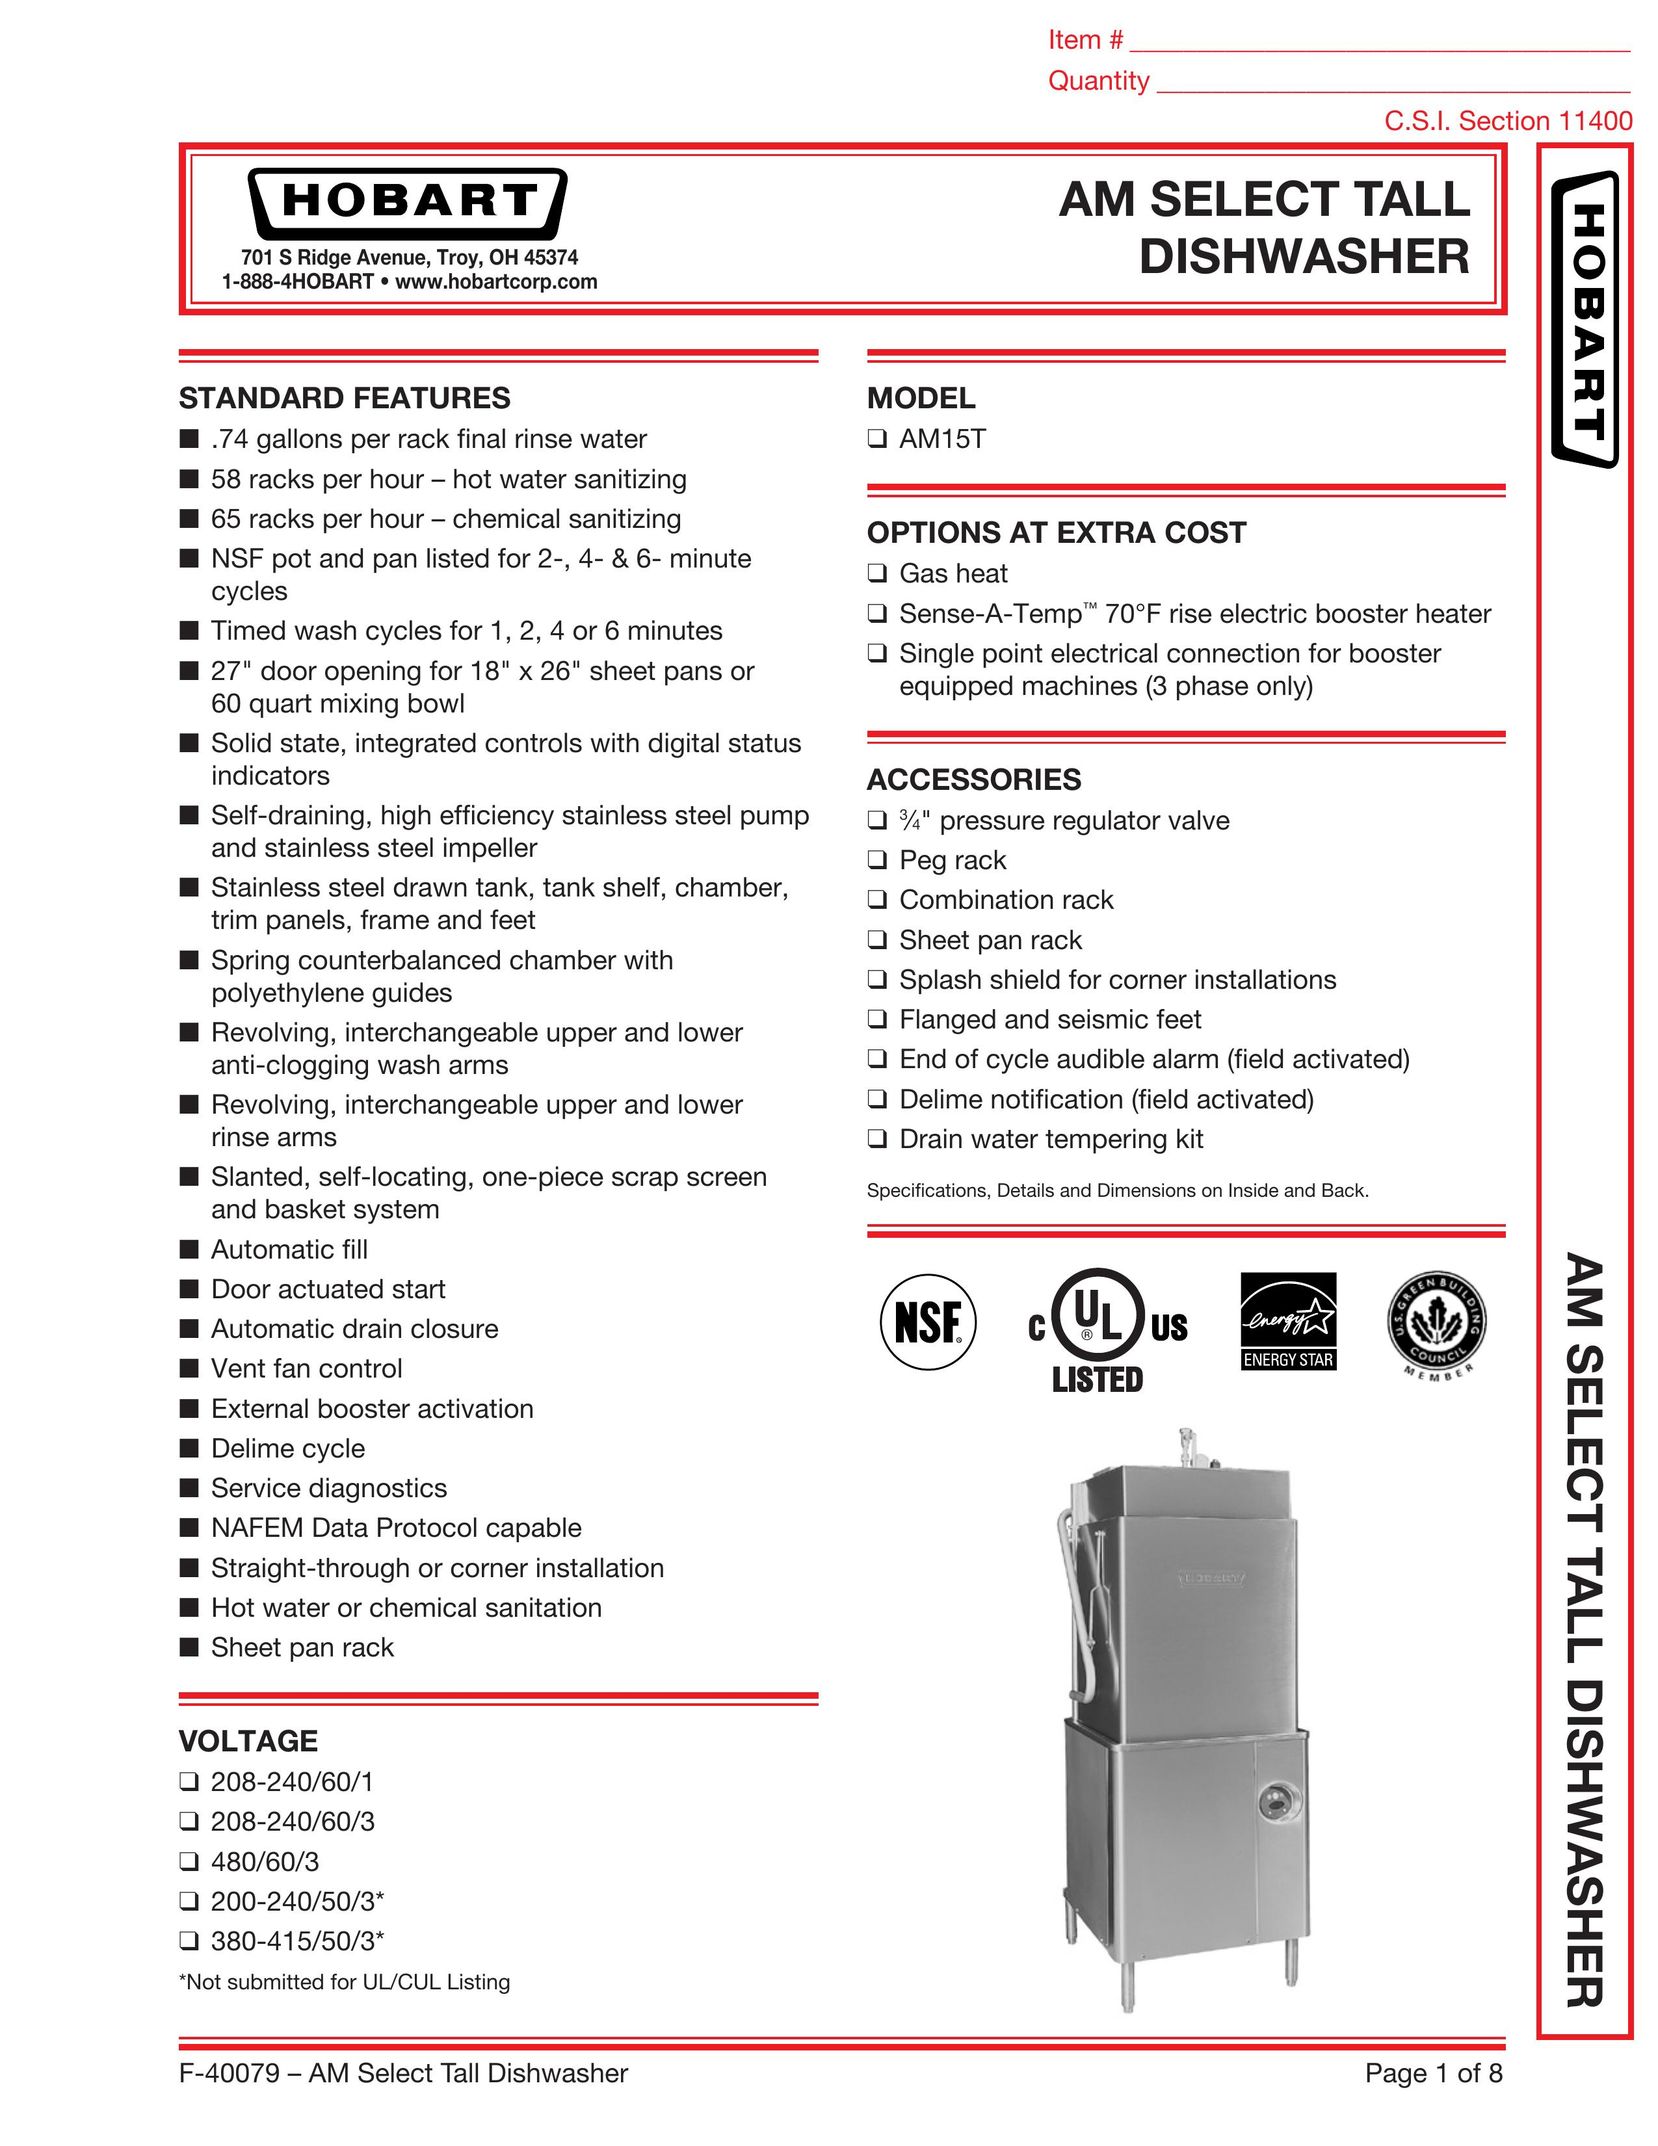 Hobart AM15T Dishwasher User Manual